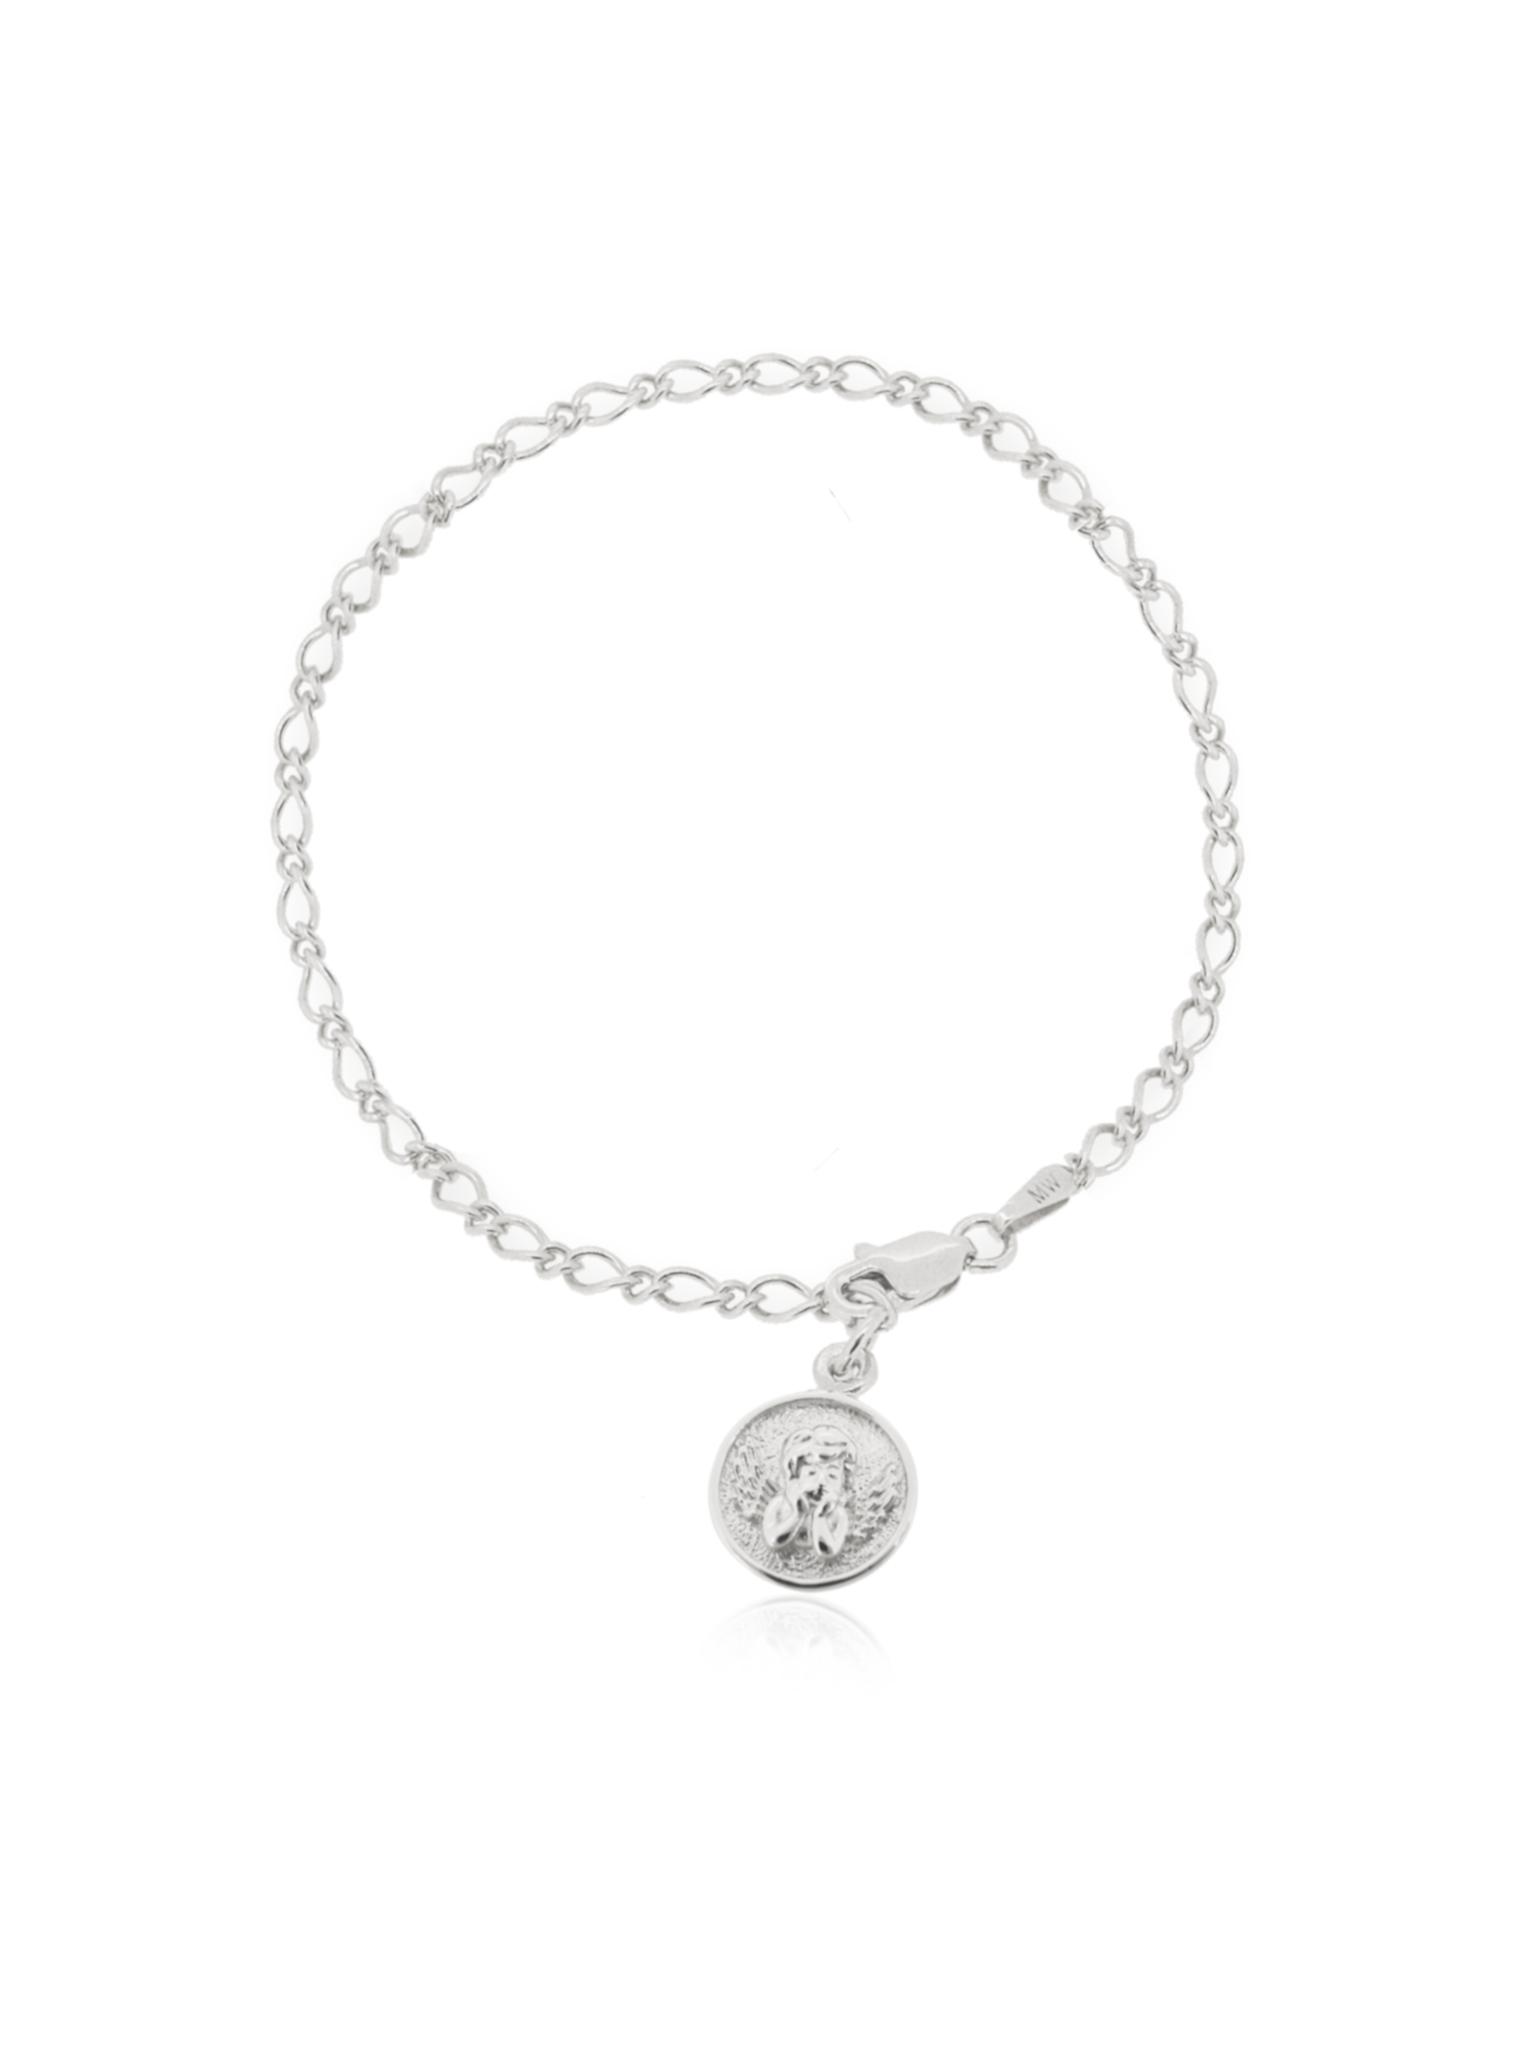 Silver arrow charm bracelet for men, black cords, custom size and colo –  Shani & Adi Jewelry